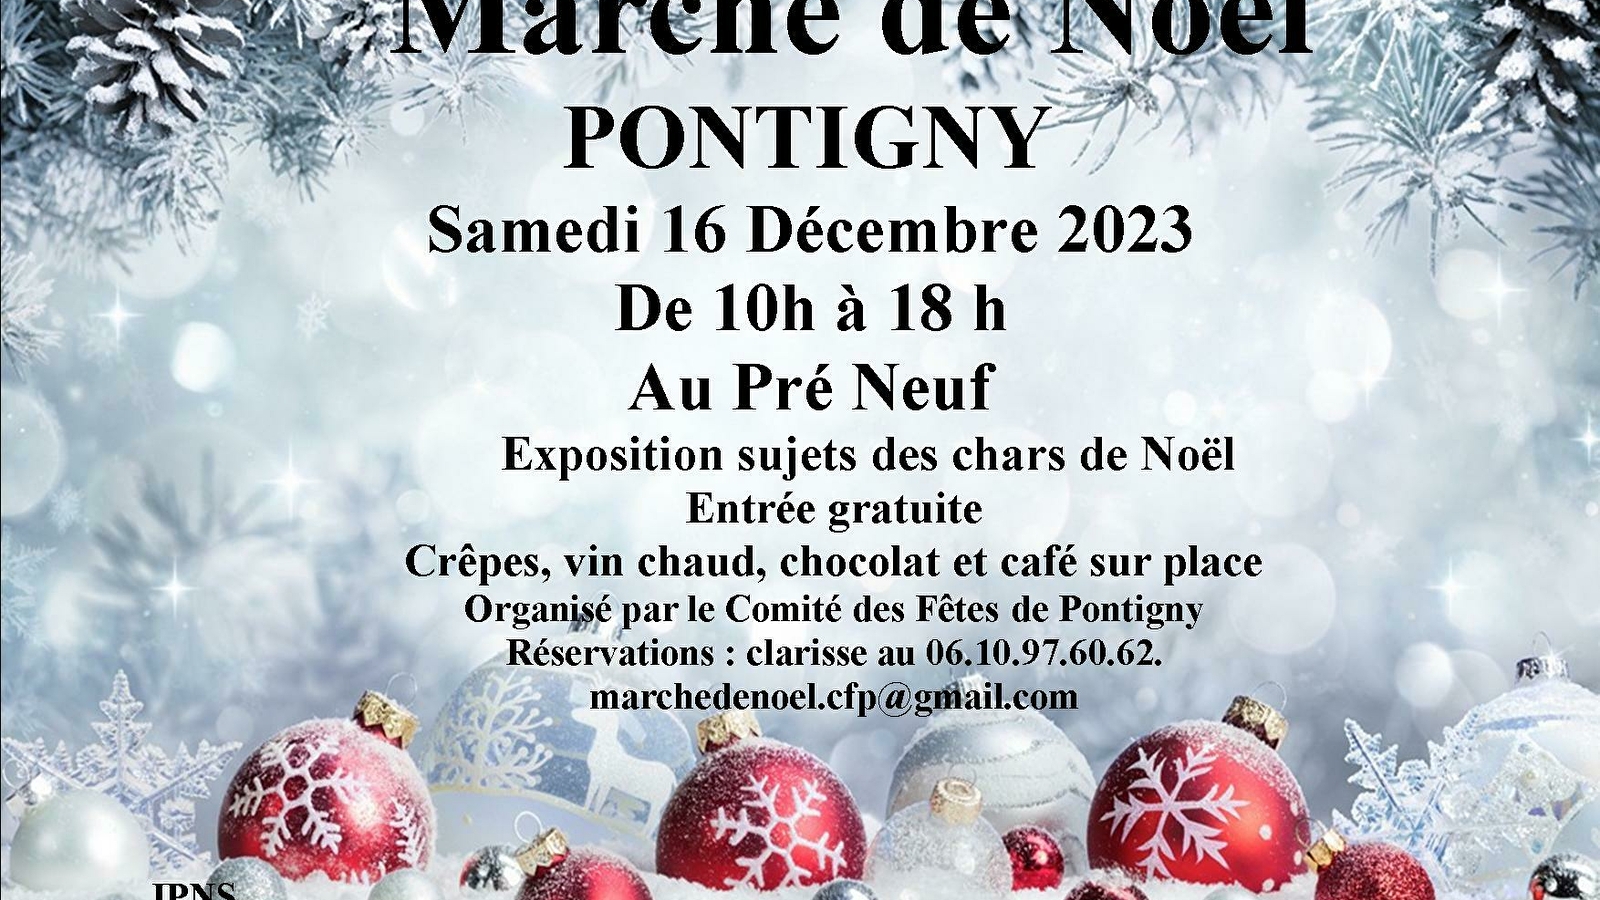 Marché de Noël - Pontigny